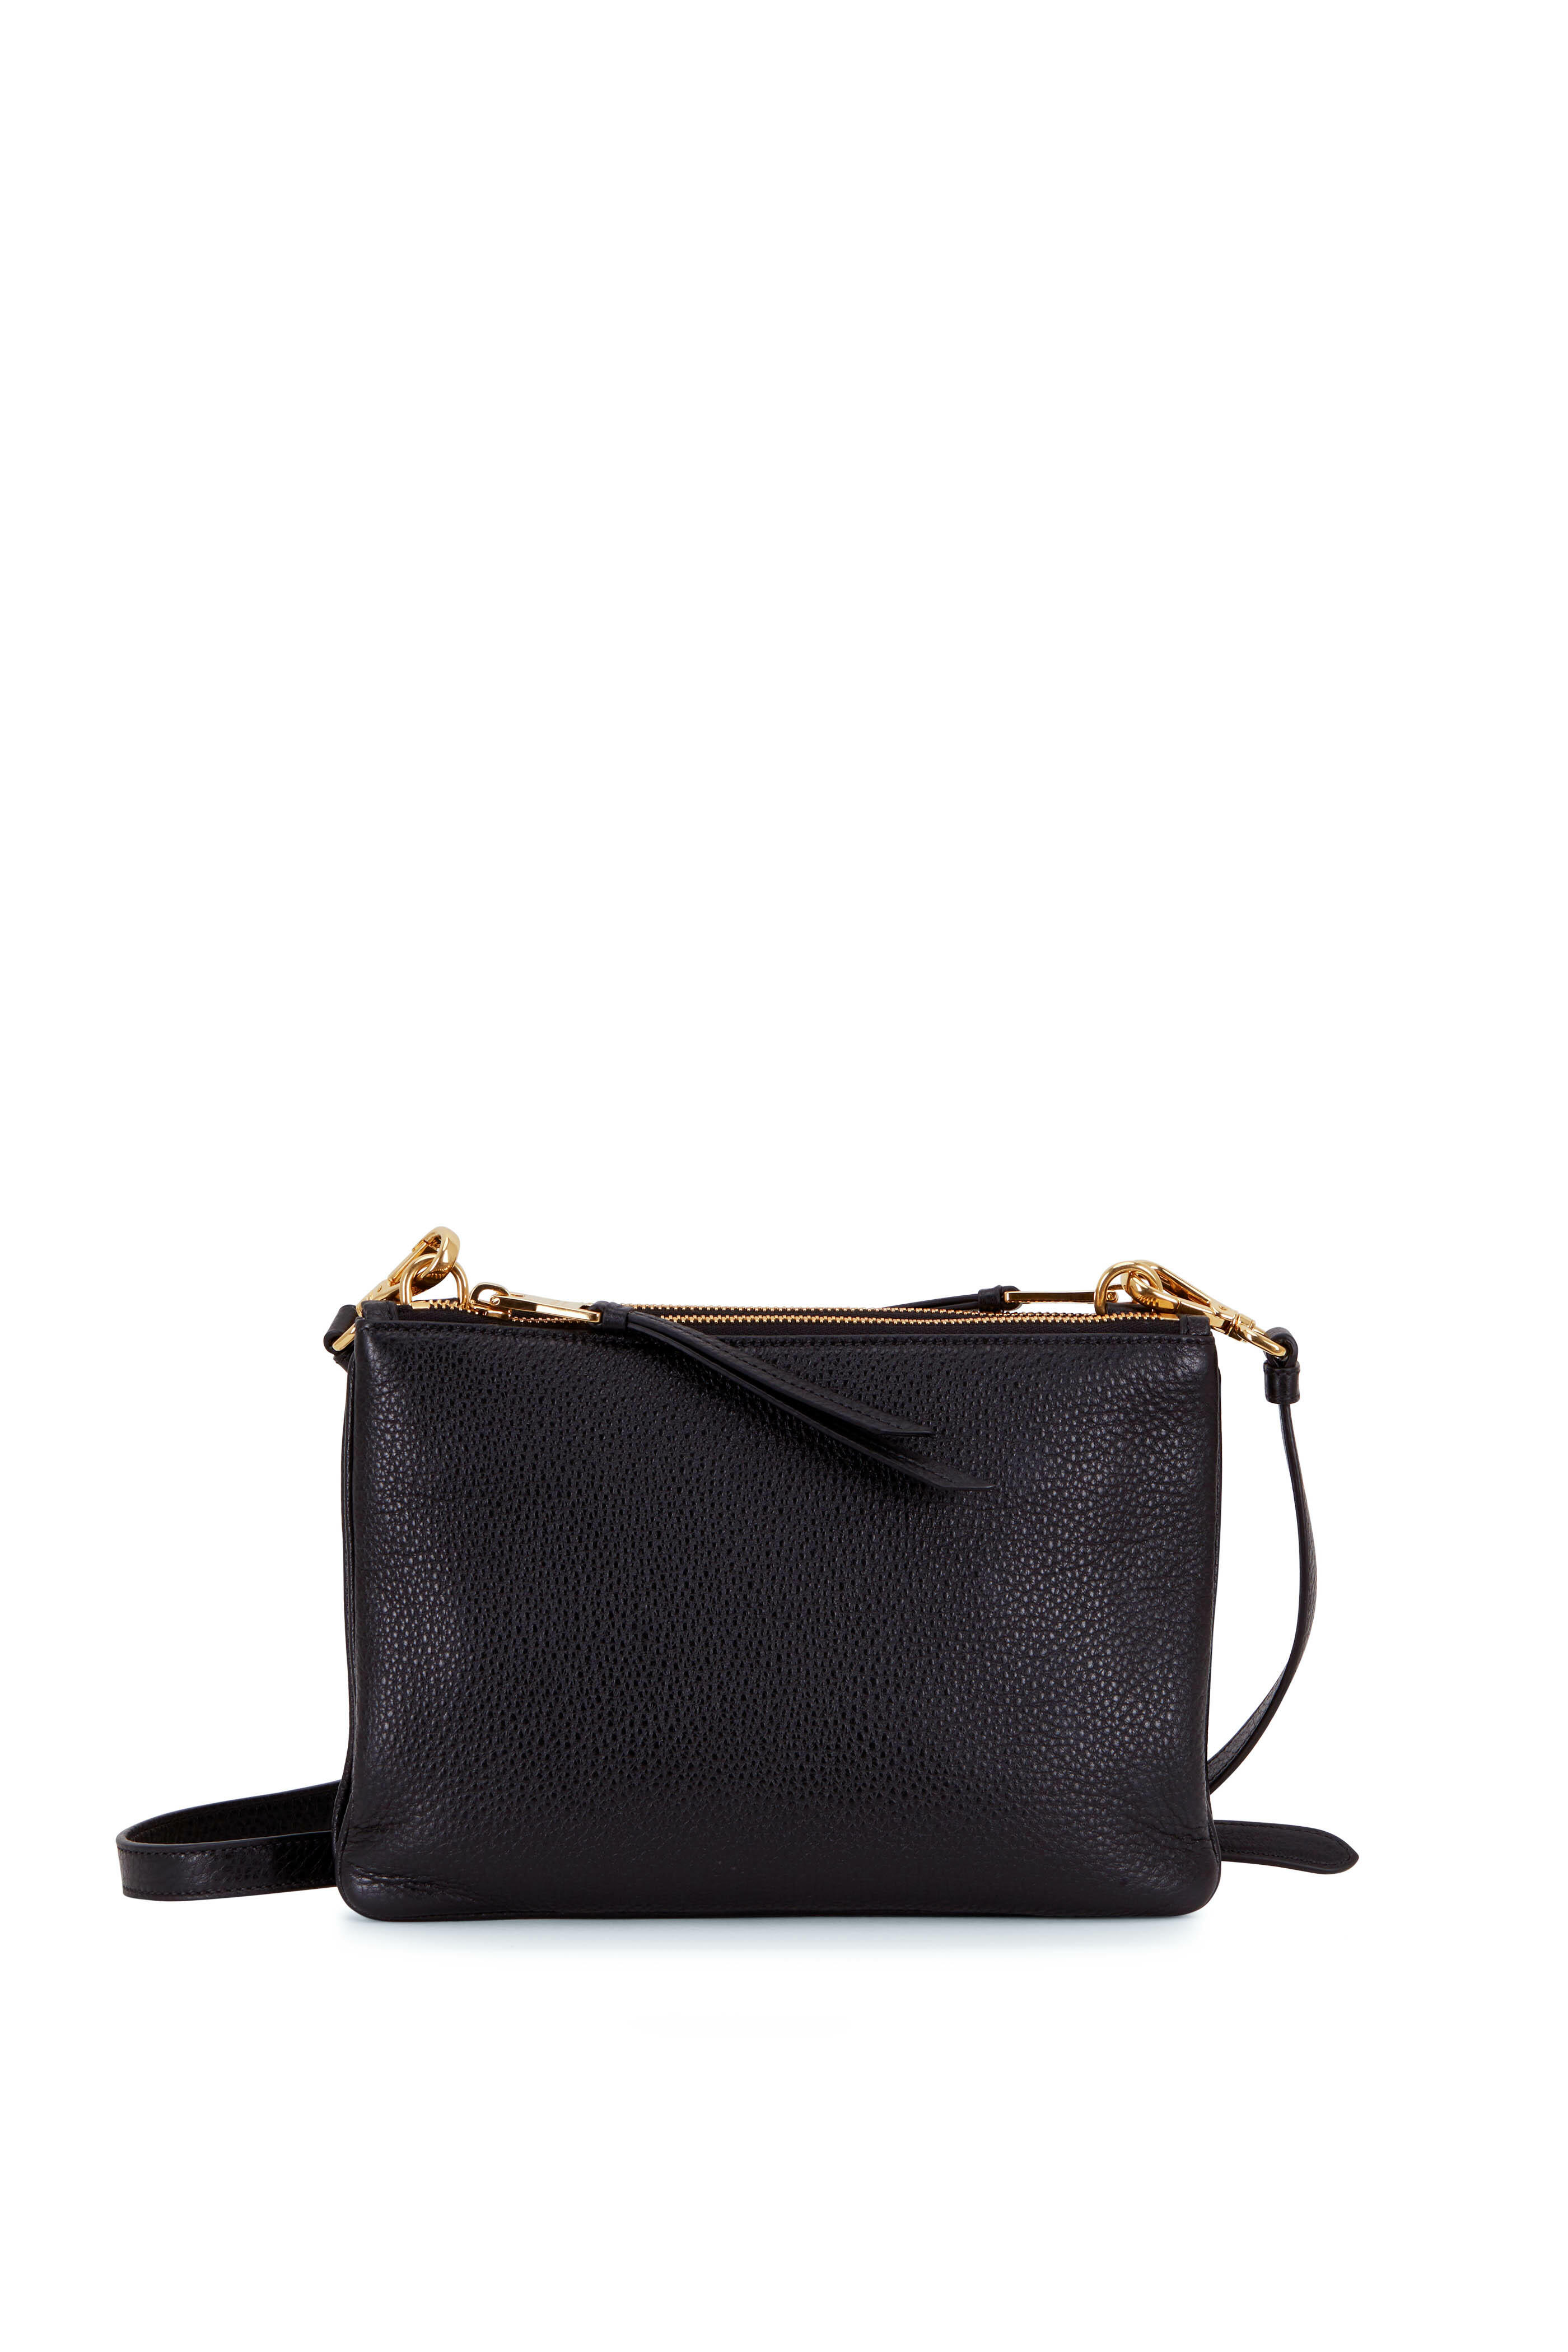 Prada - Double Pocket Leather Small Shoulder Bag Brown